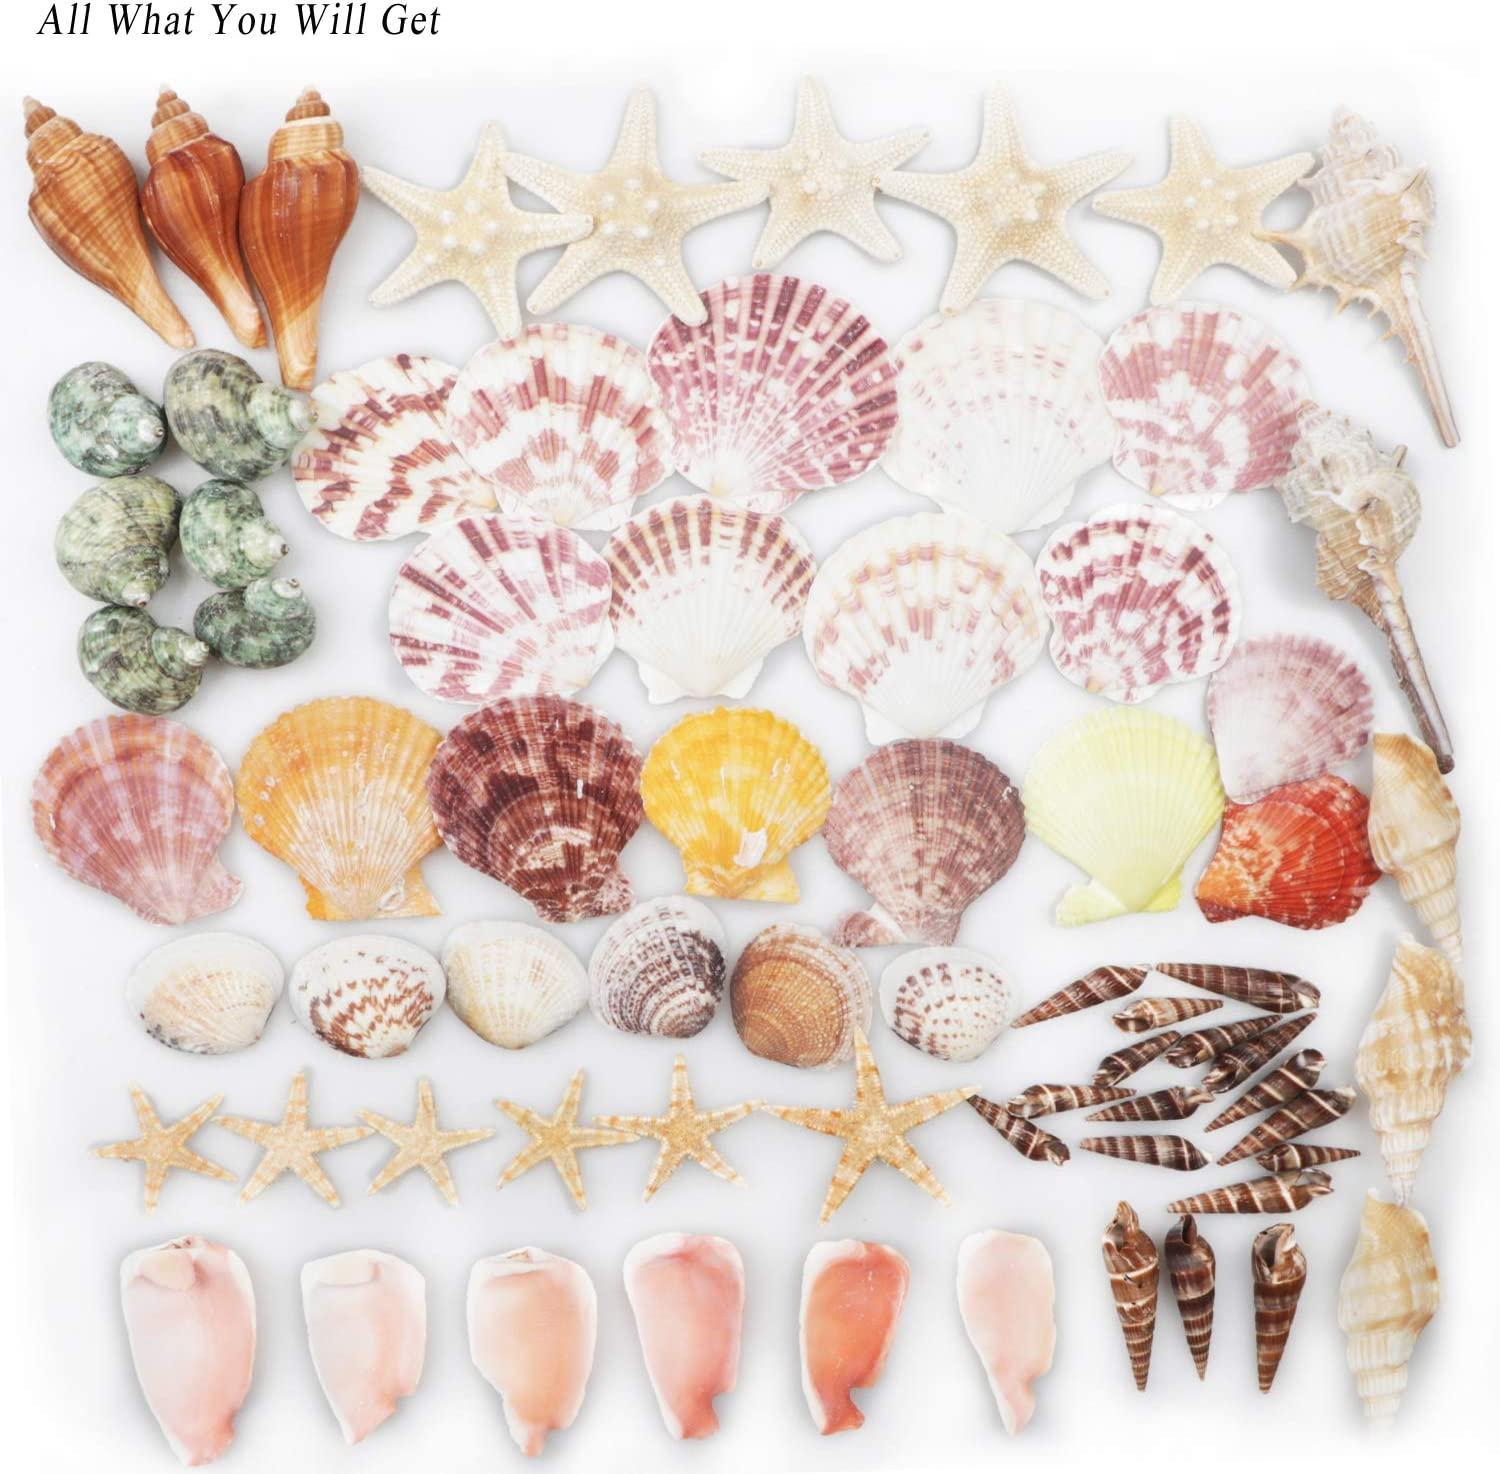 Shells, seashells and coral home decor